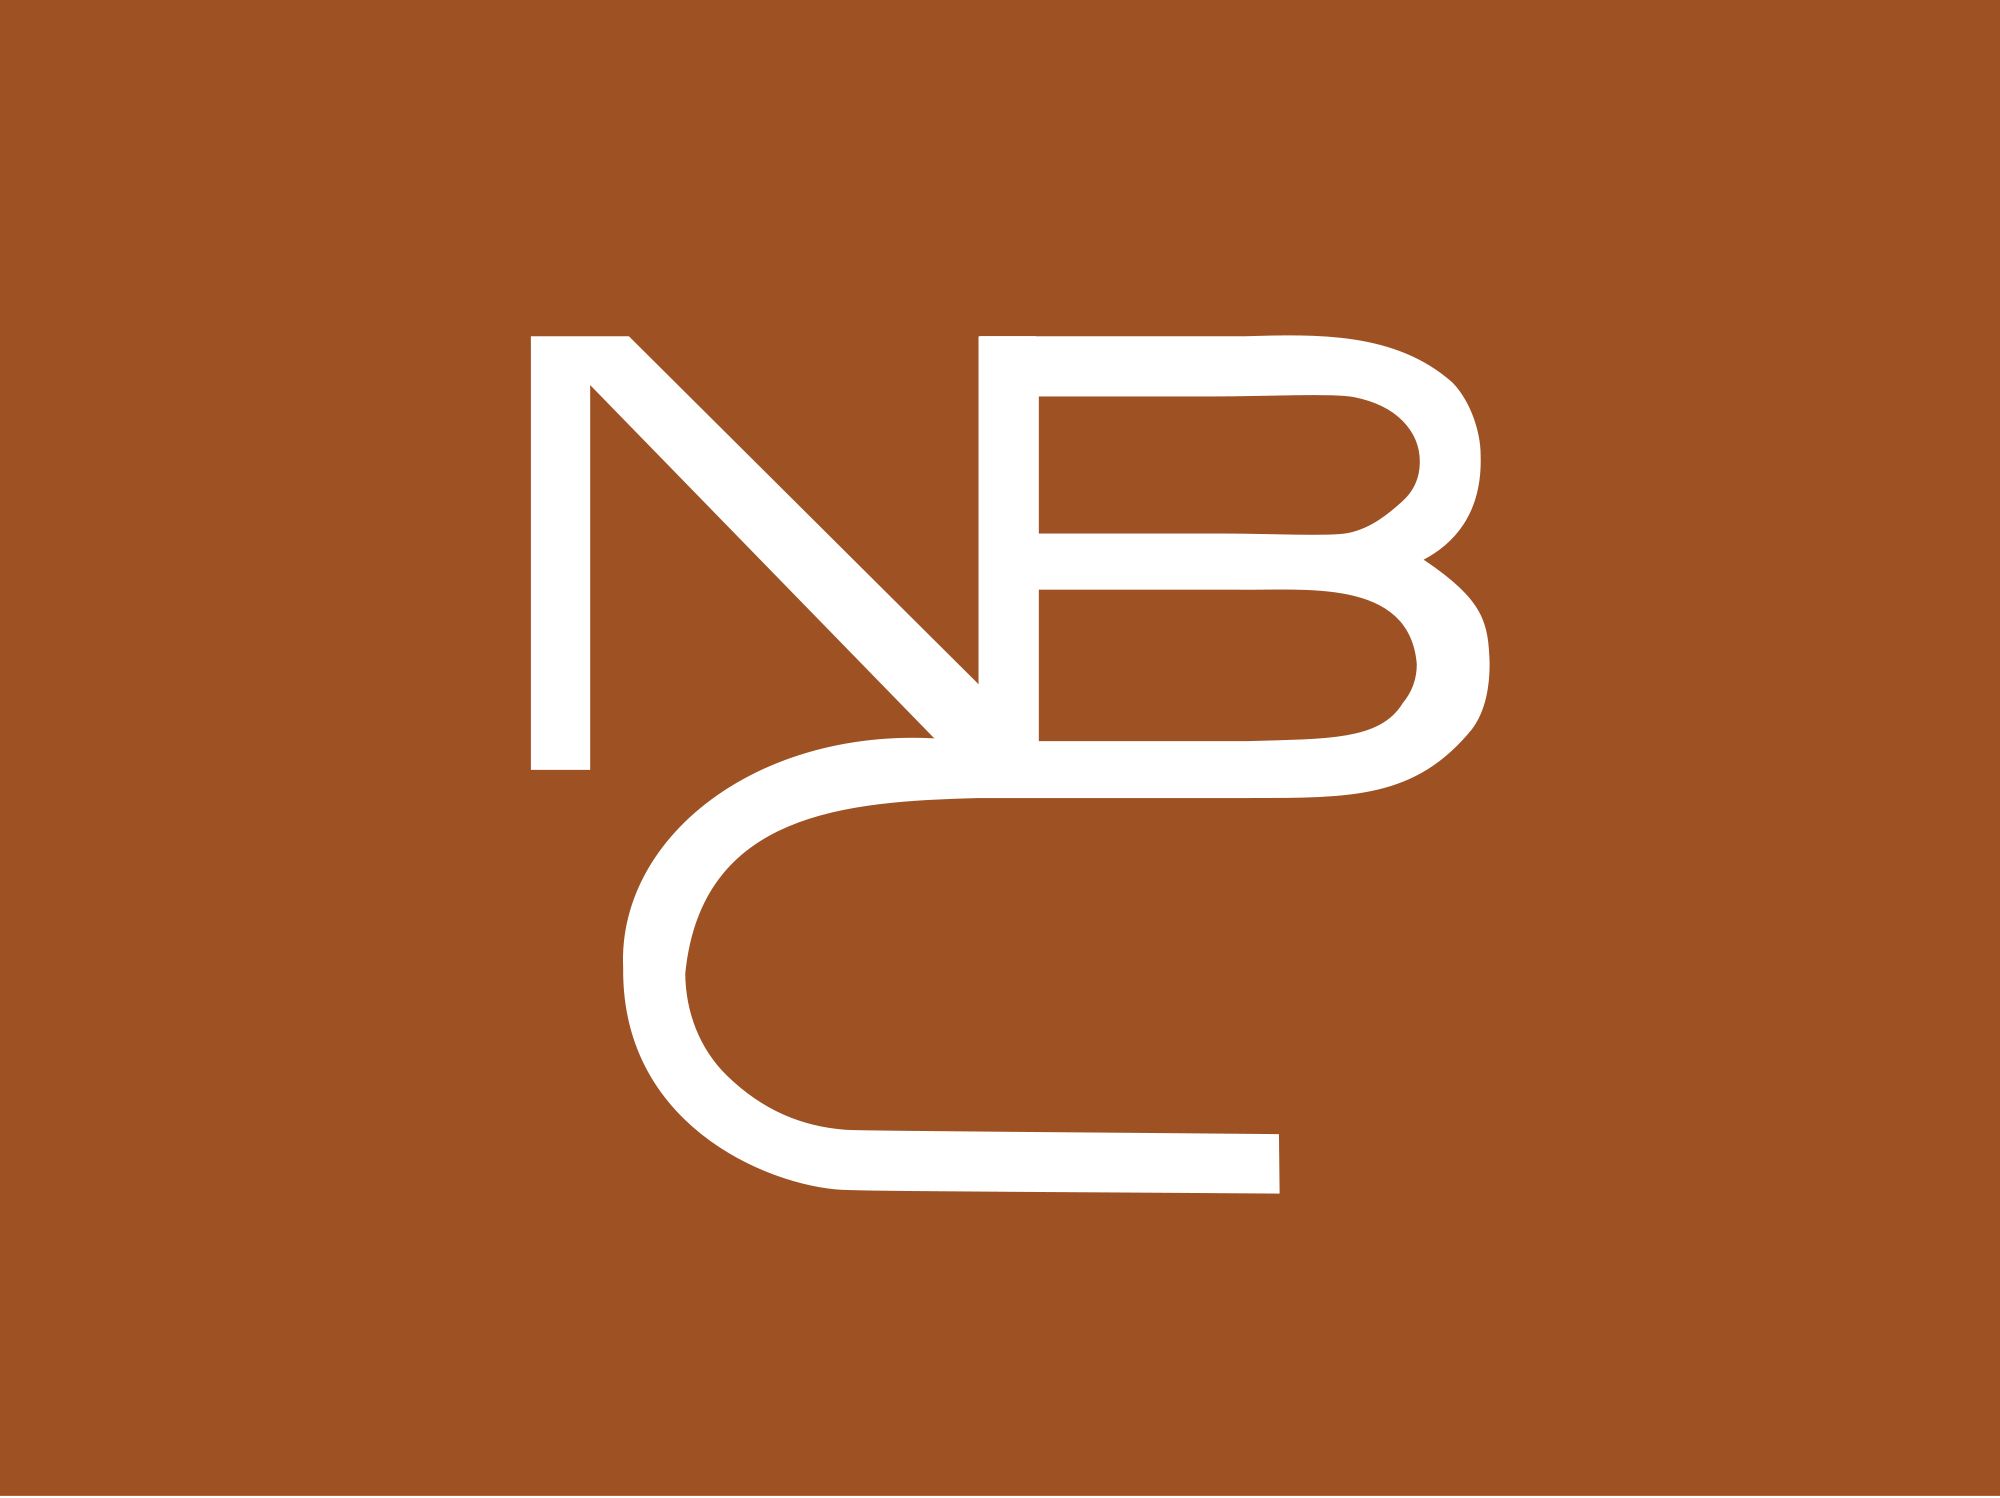 Orange Snake Logo - File:NBC snake logo 1959.svg - Wikimedia Commons